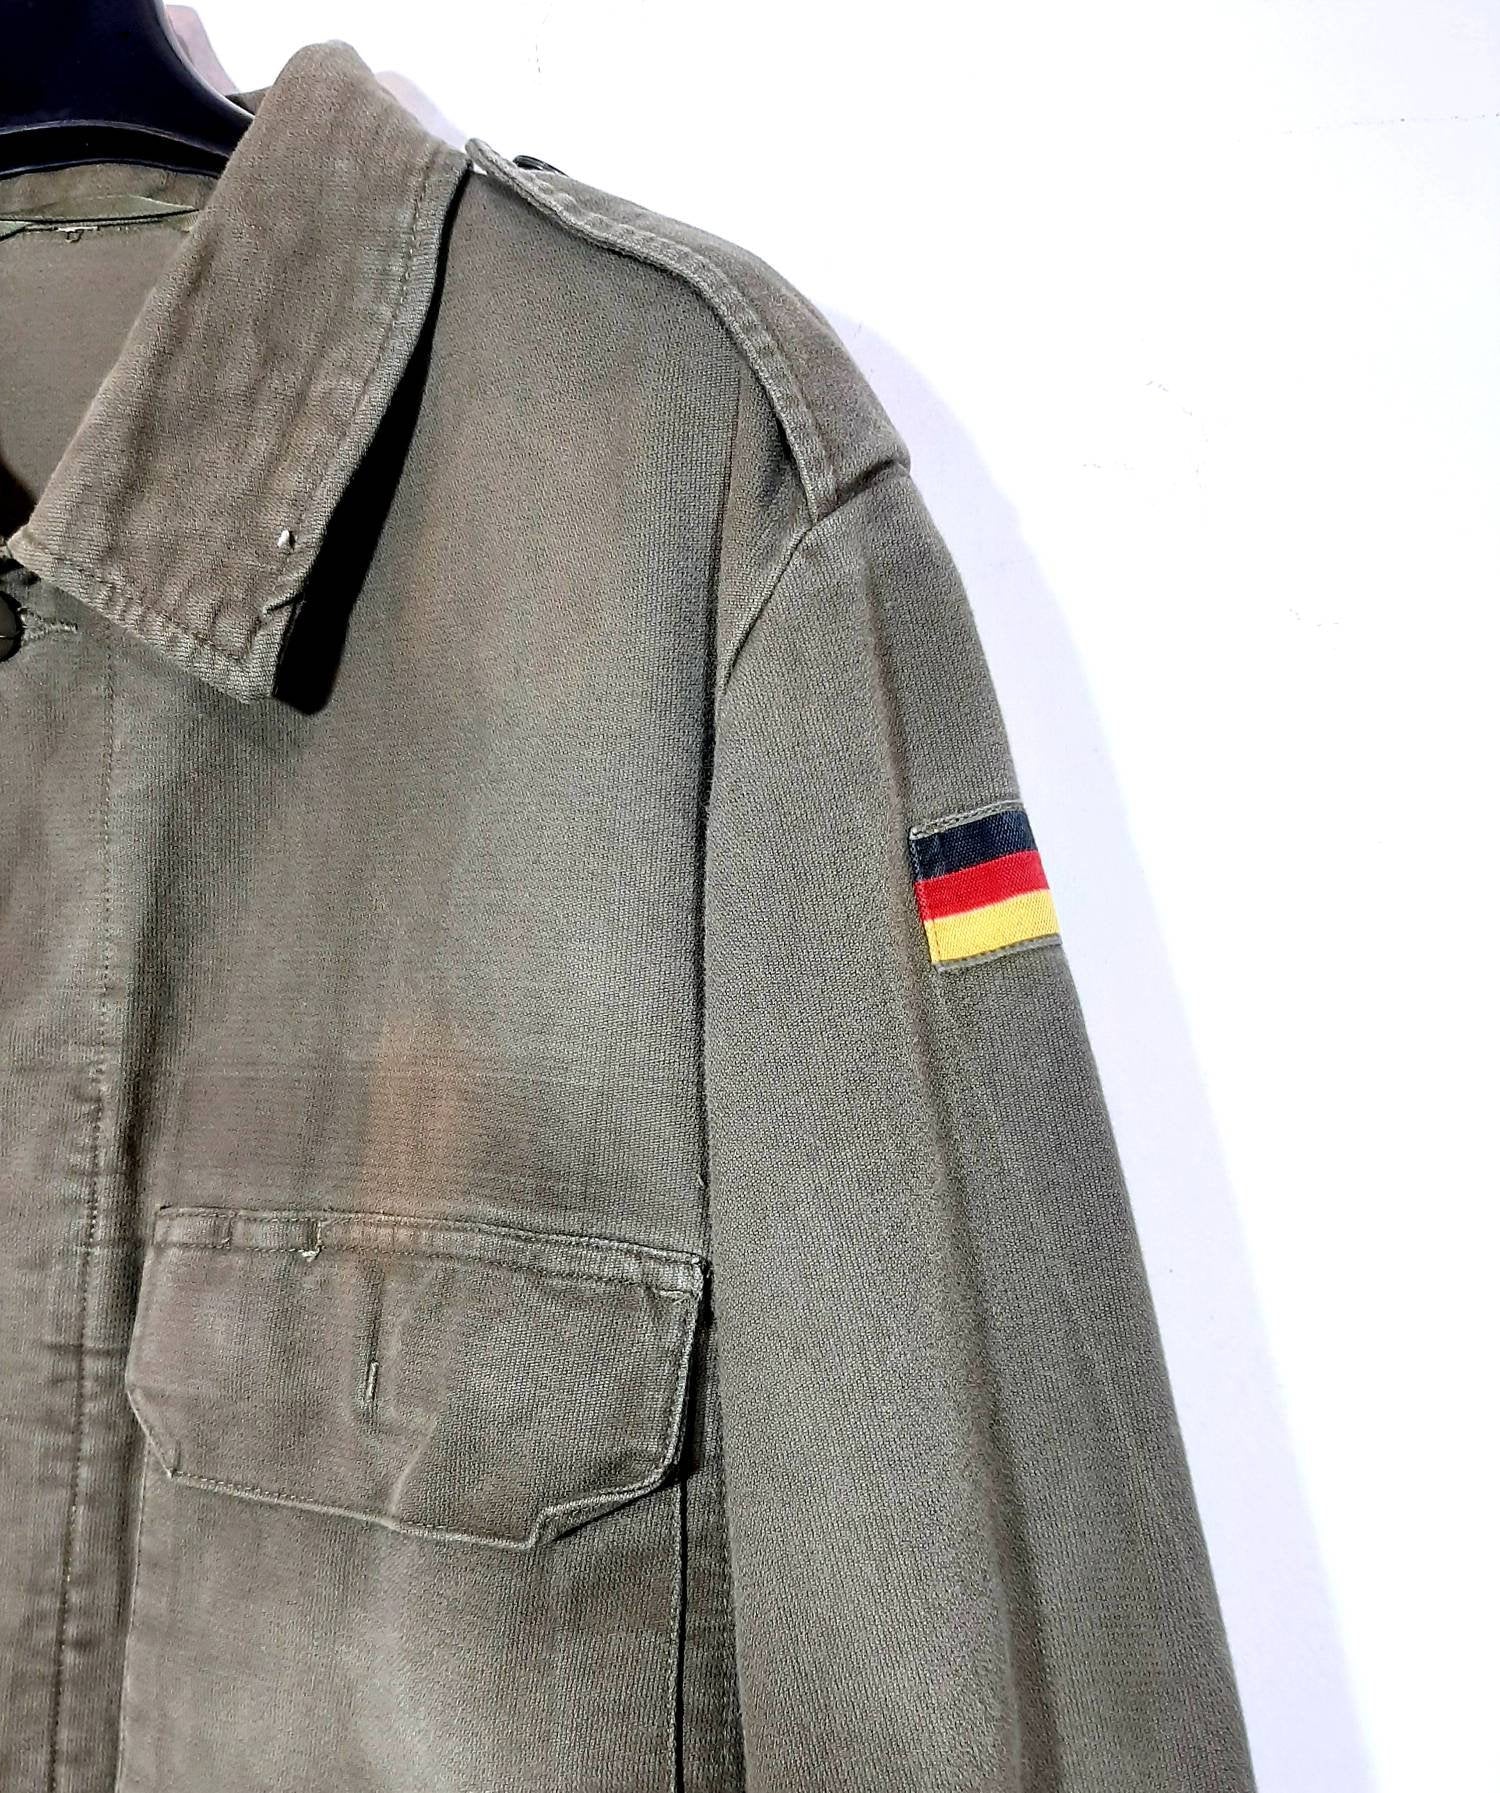 Canvas Field Jacket, Military, Hunting Style Coat | eBay